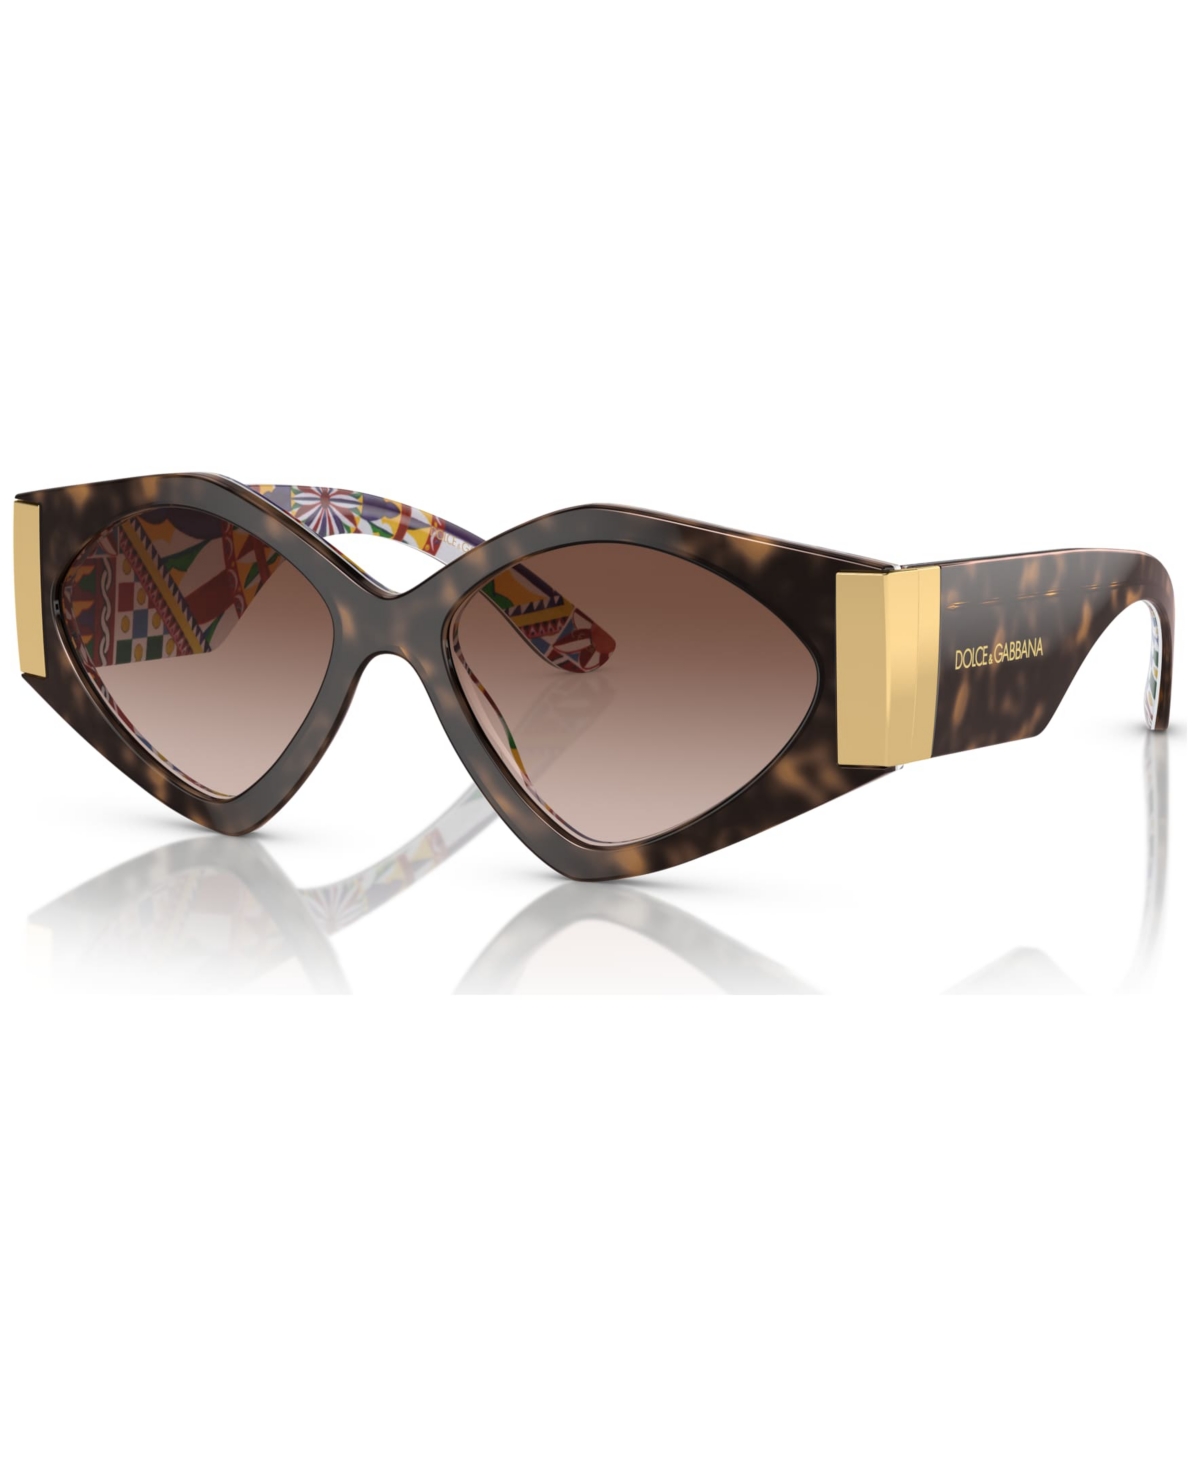 Dolce&Gabbana Women's Sunglasses, DG4396 - Havana on White Barrow